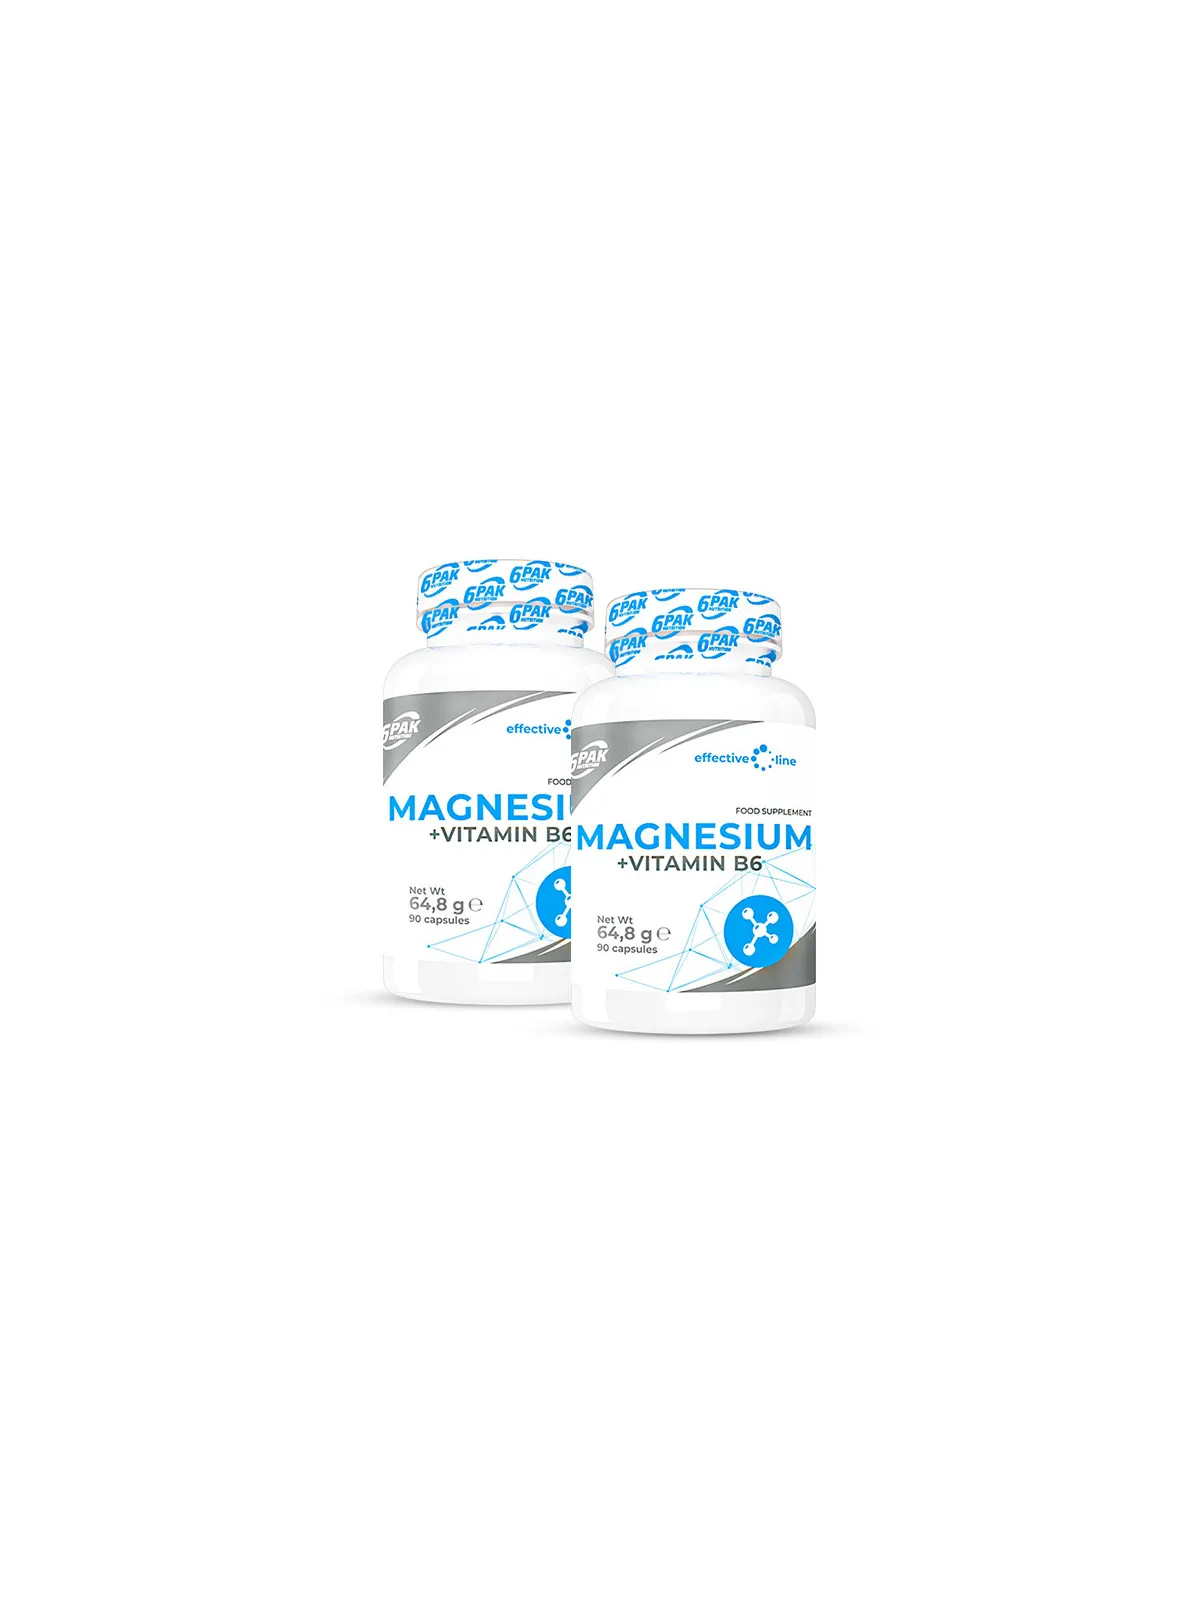 Magnesium + Vitamin B6 - Zestaw Dwóch Opakowań